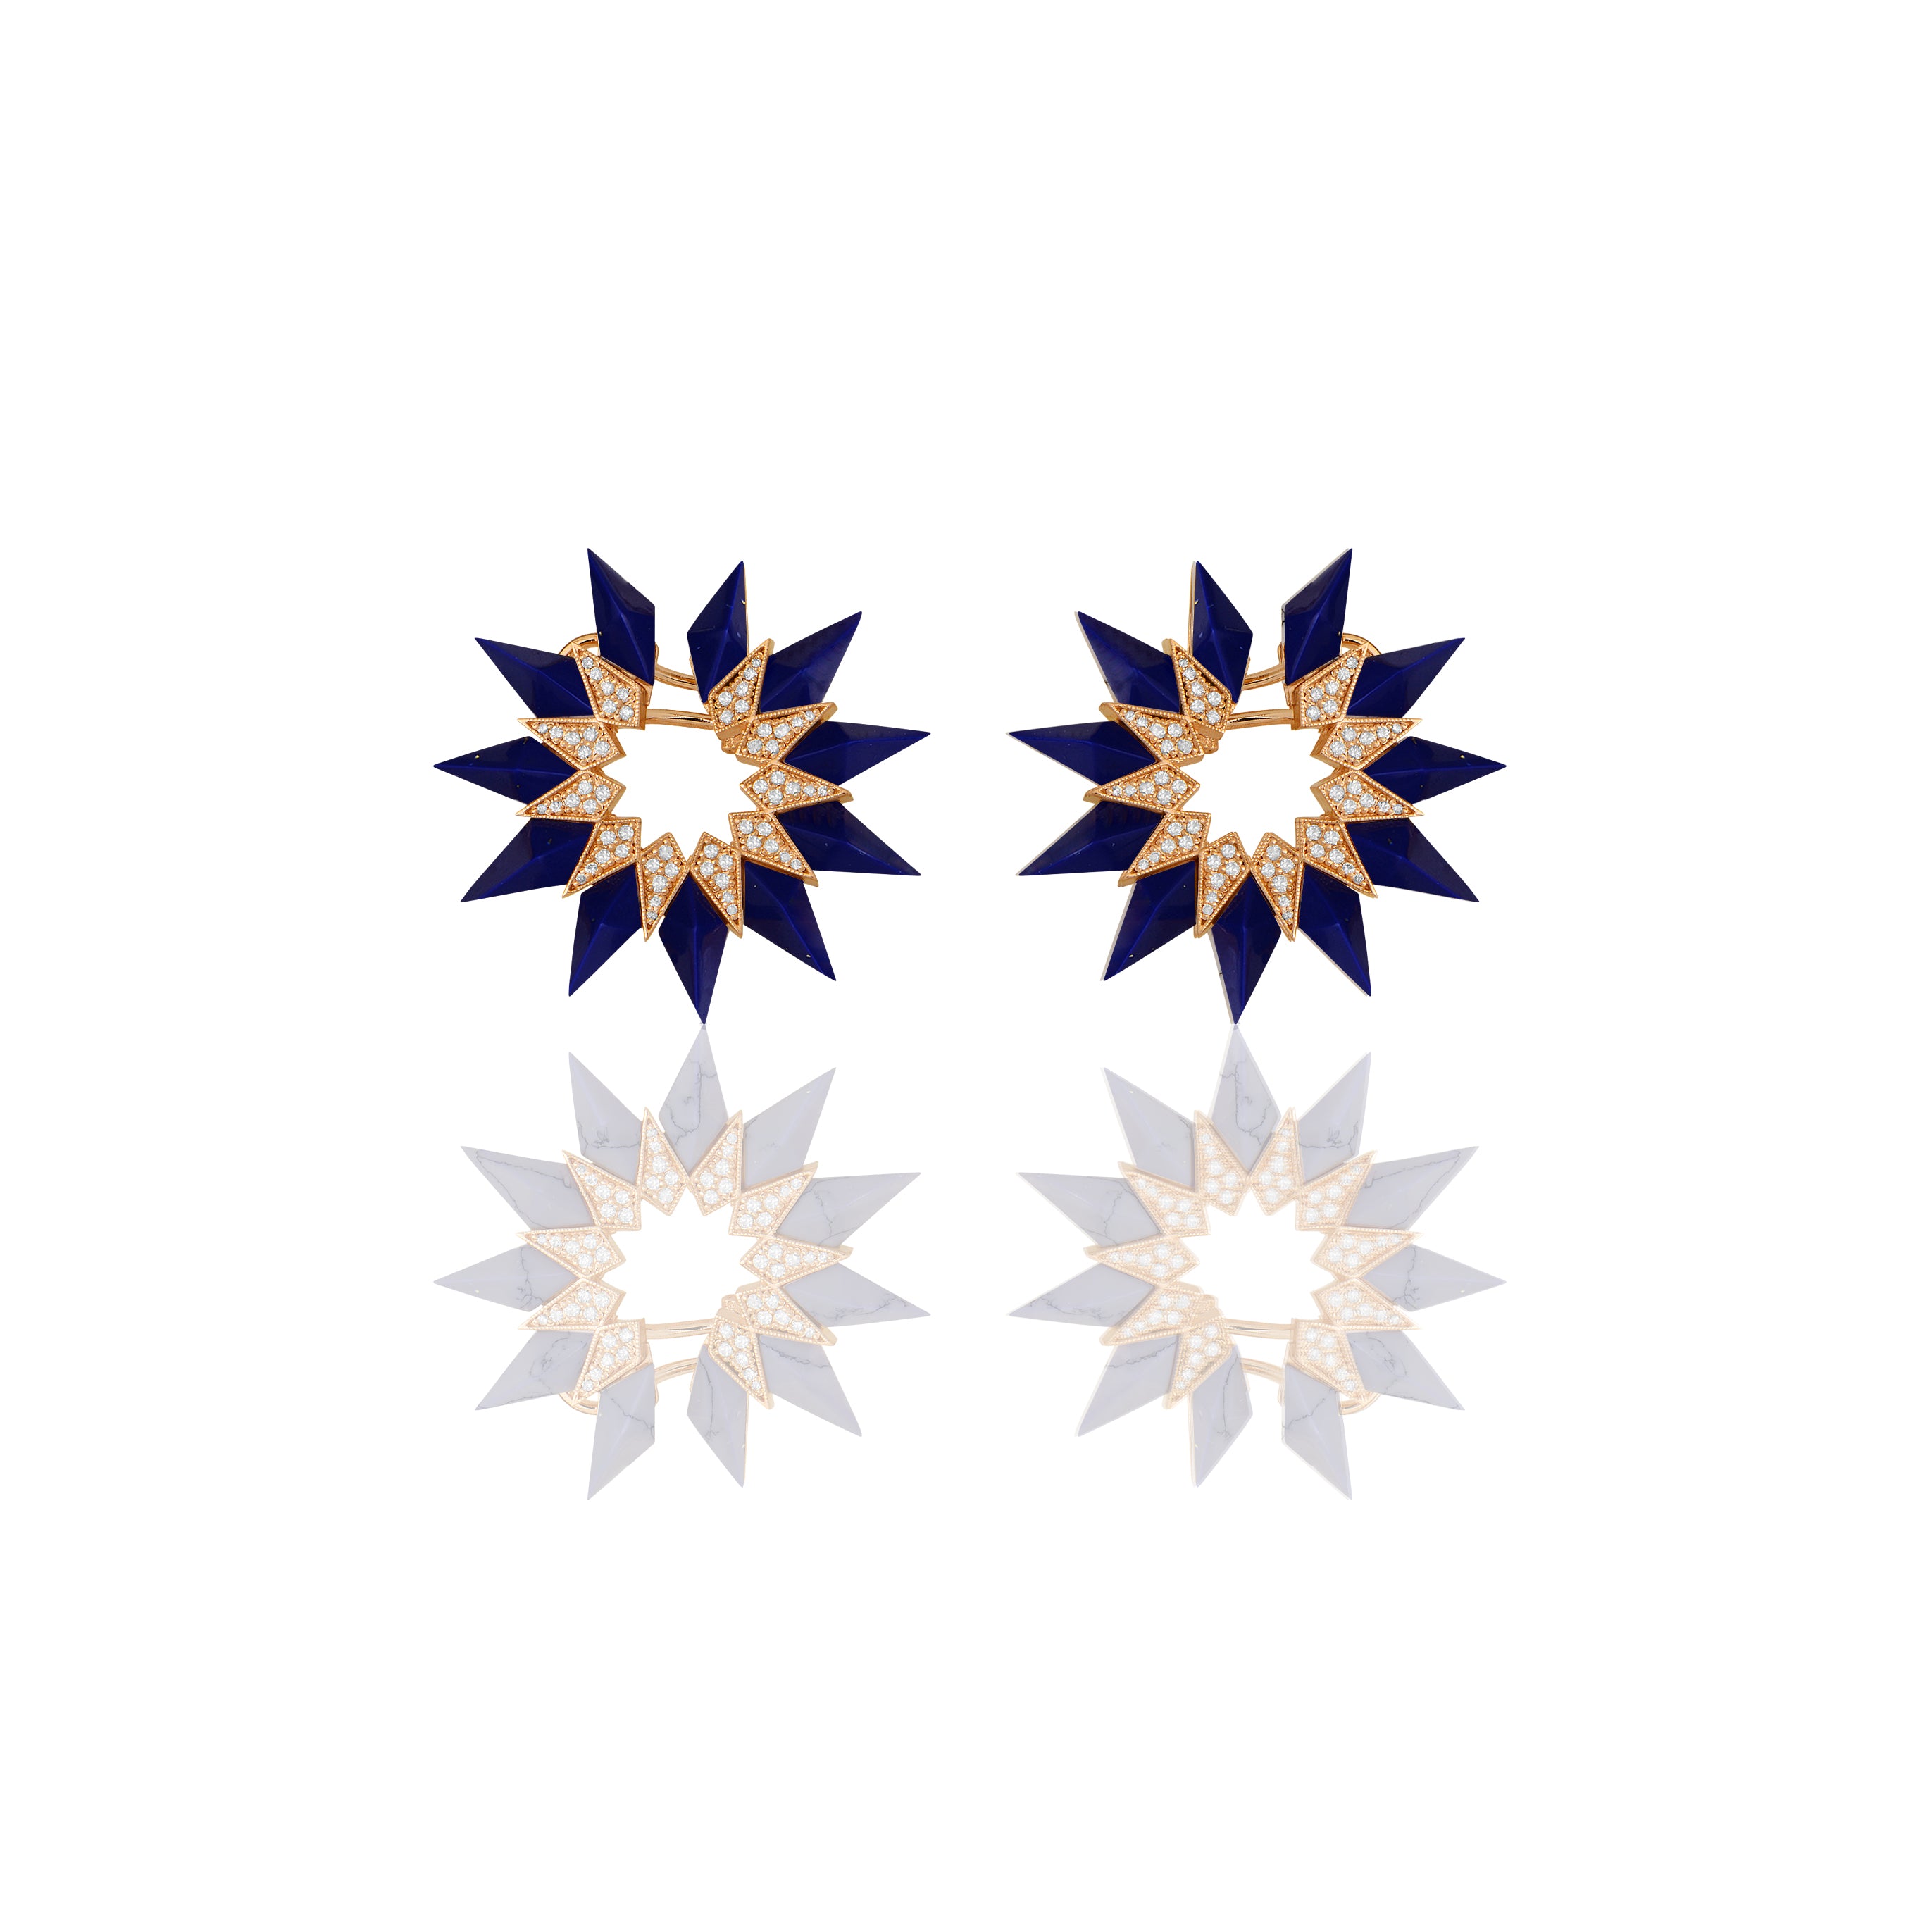 Nord Earrings - Lapis Lazuli